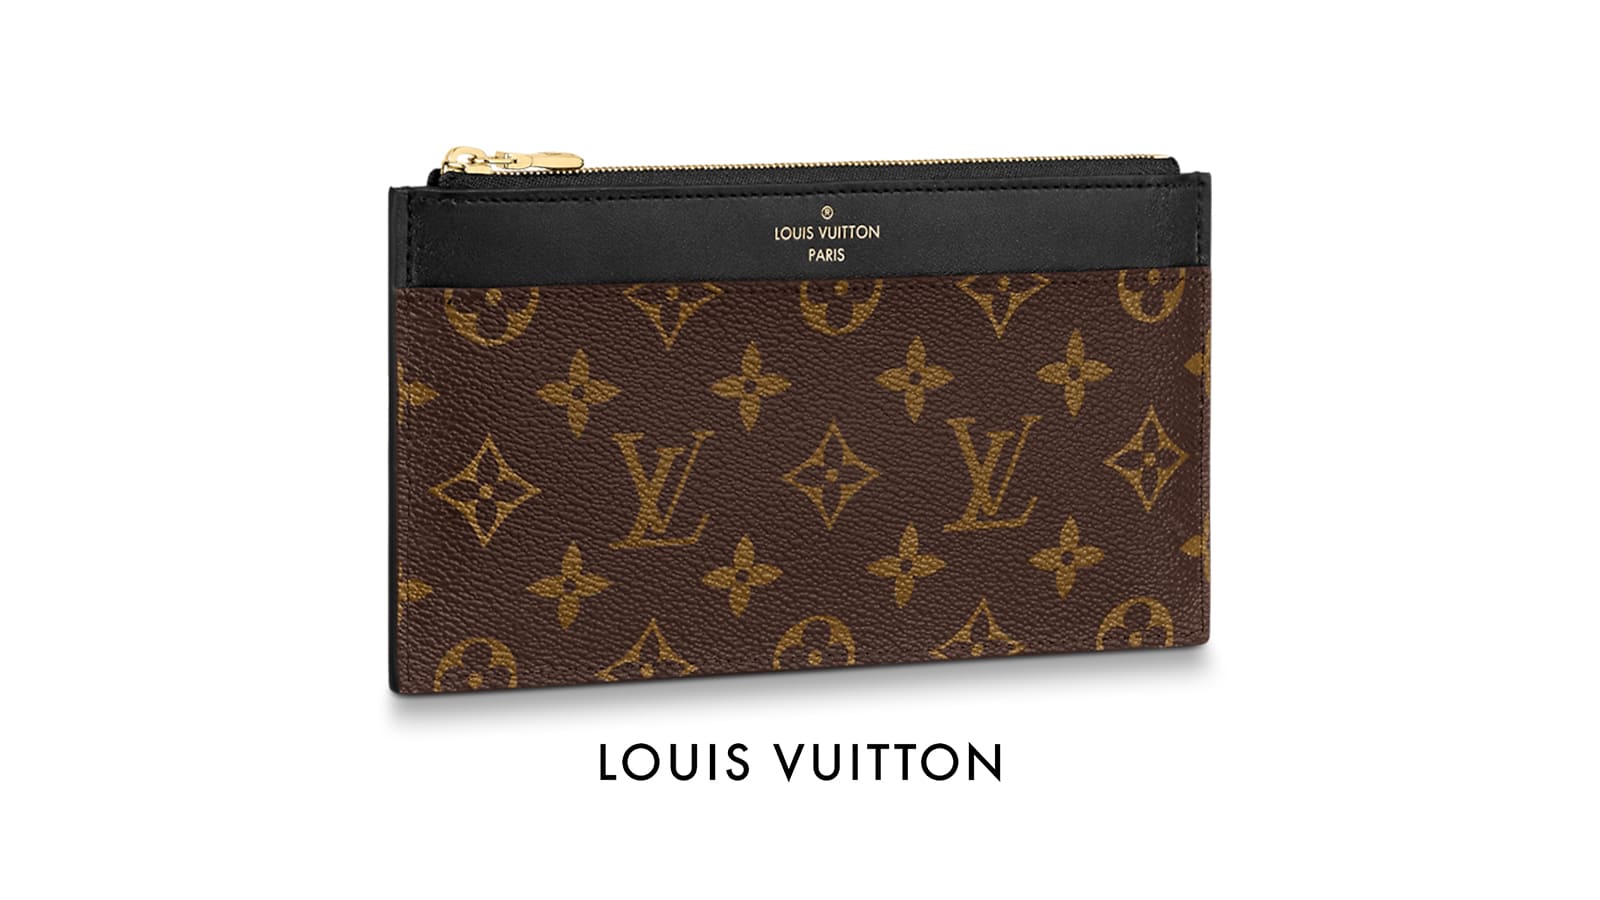 Louis Vuitton(ルイ・ヴィトン)のスリムで機能的な長財布『スリム 